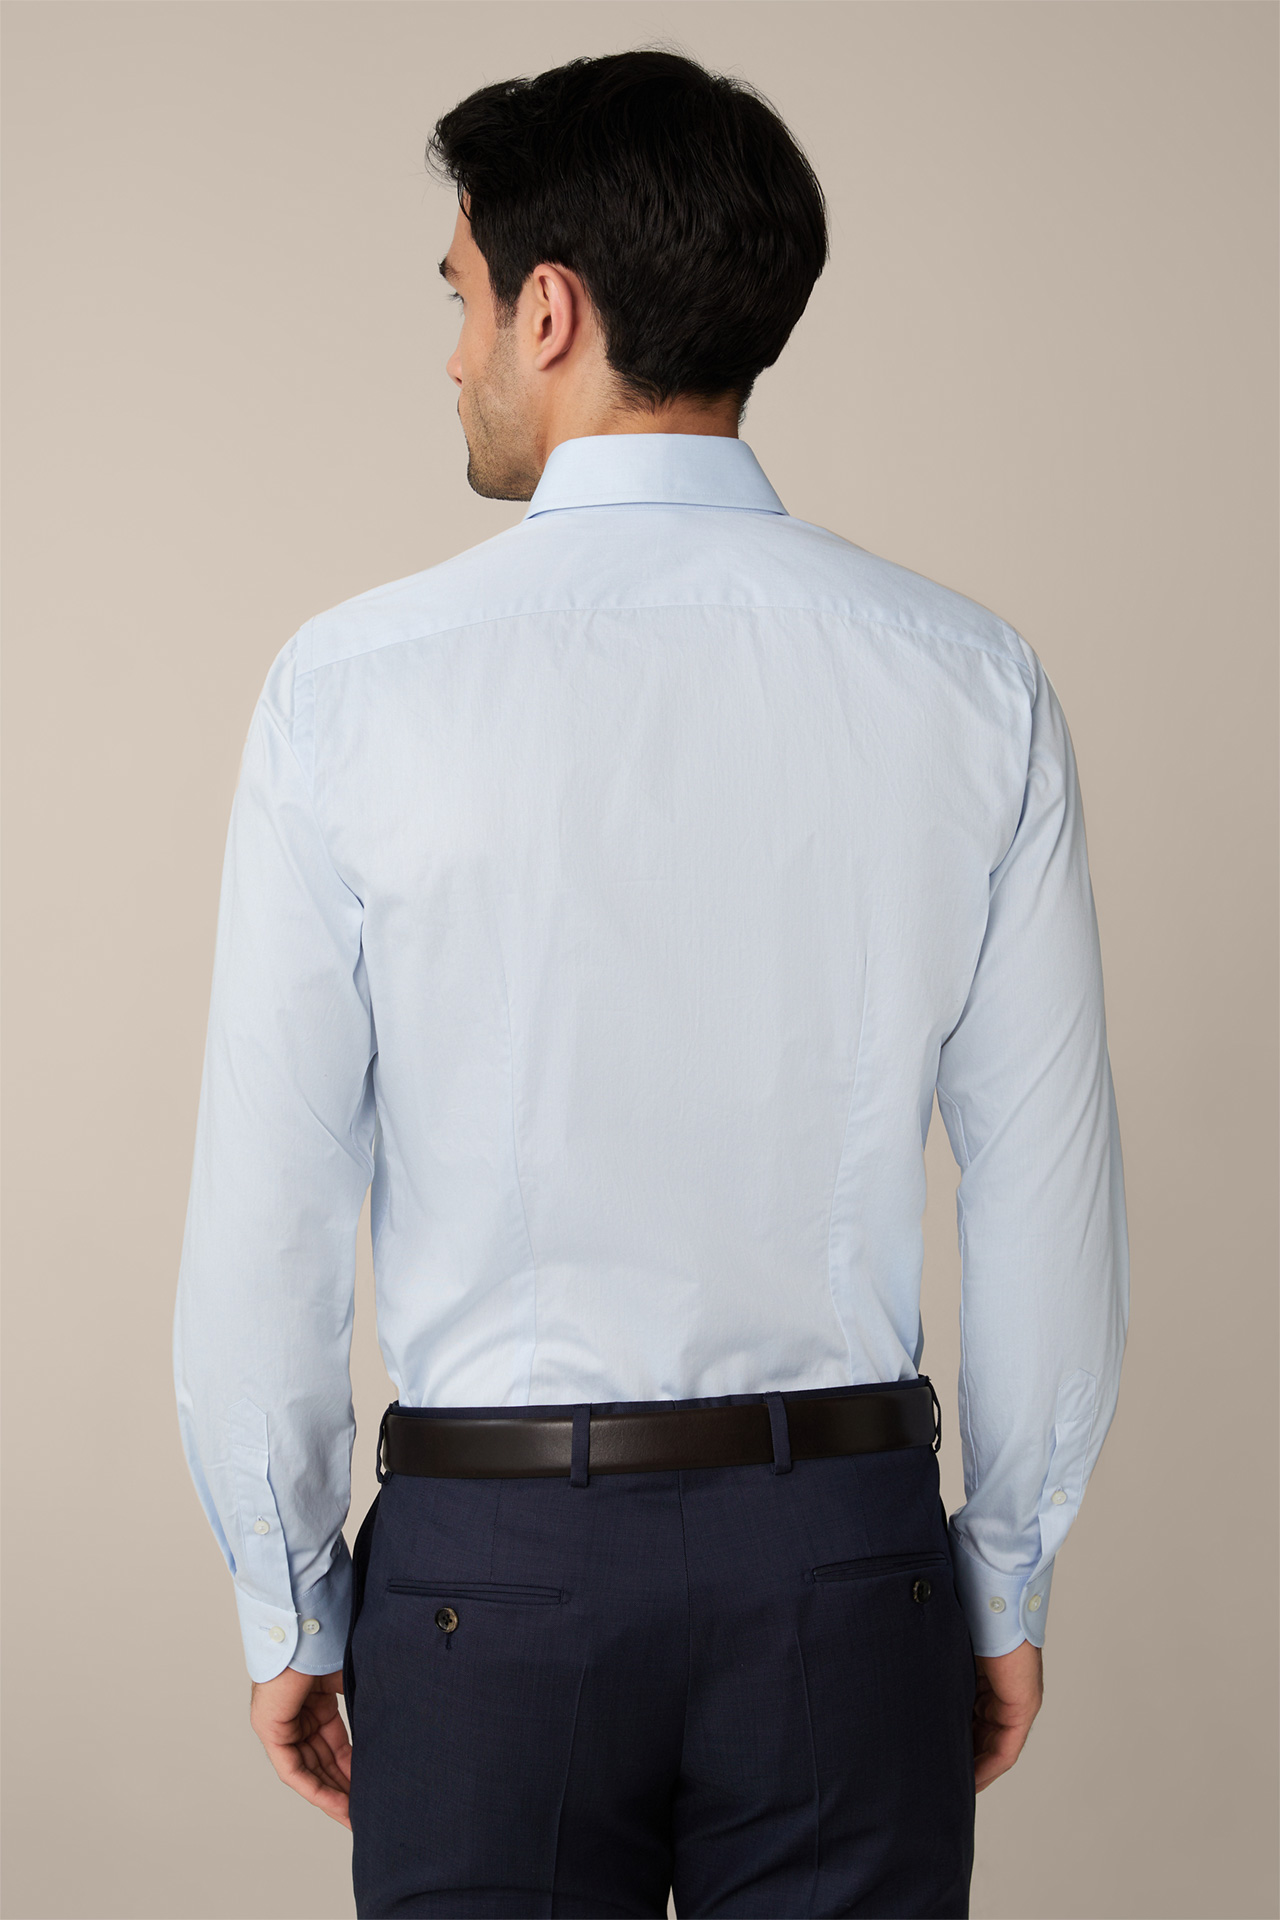 The Trivo Twill shirt in light blue